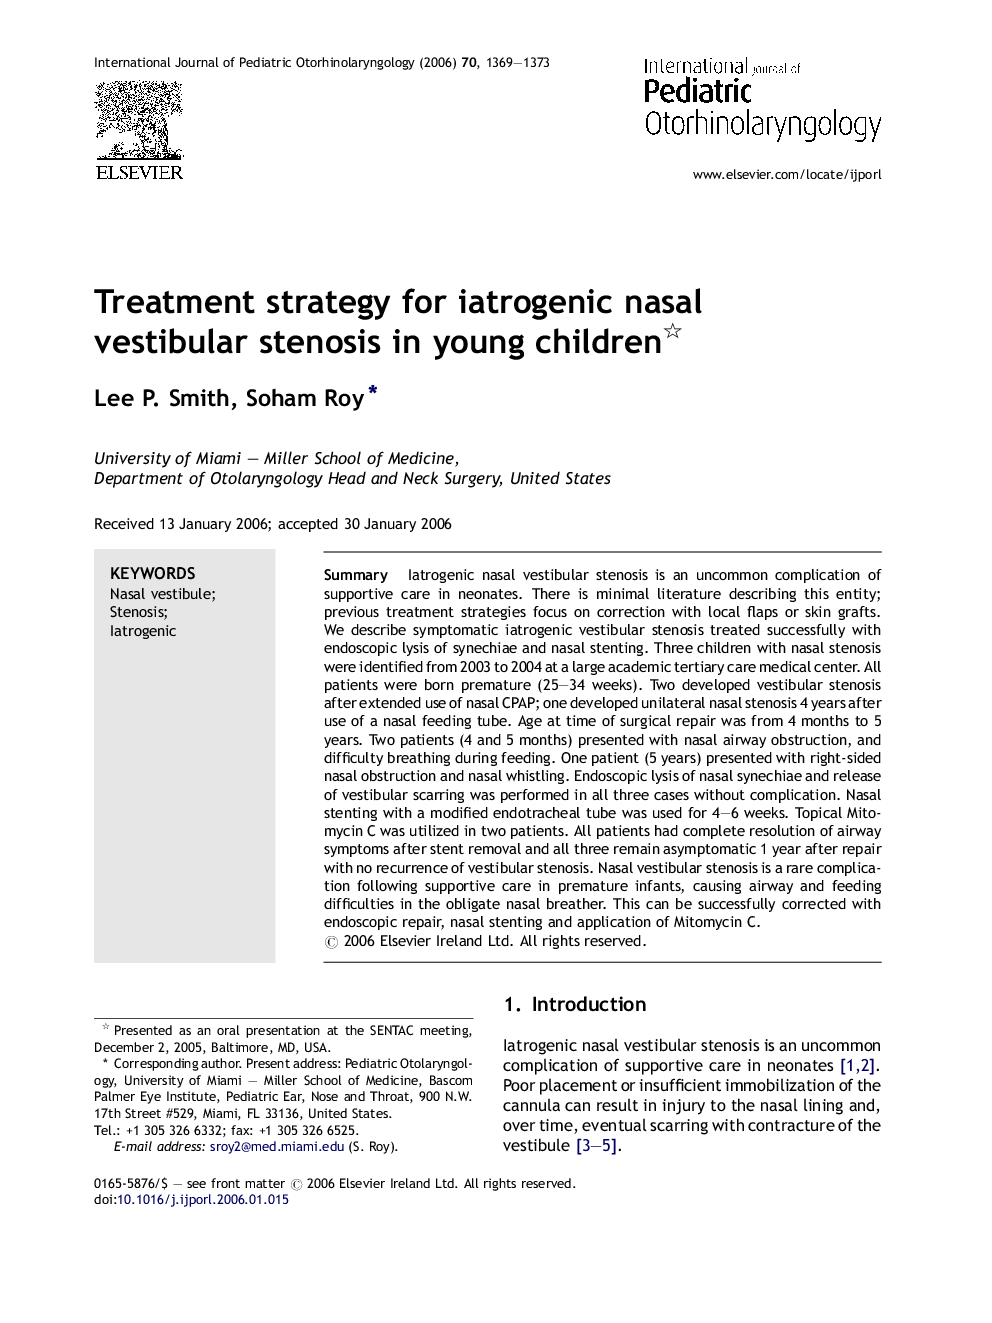 Treatment strategy for iatrogenic nasal vestibular stenosis in young children 